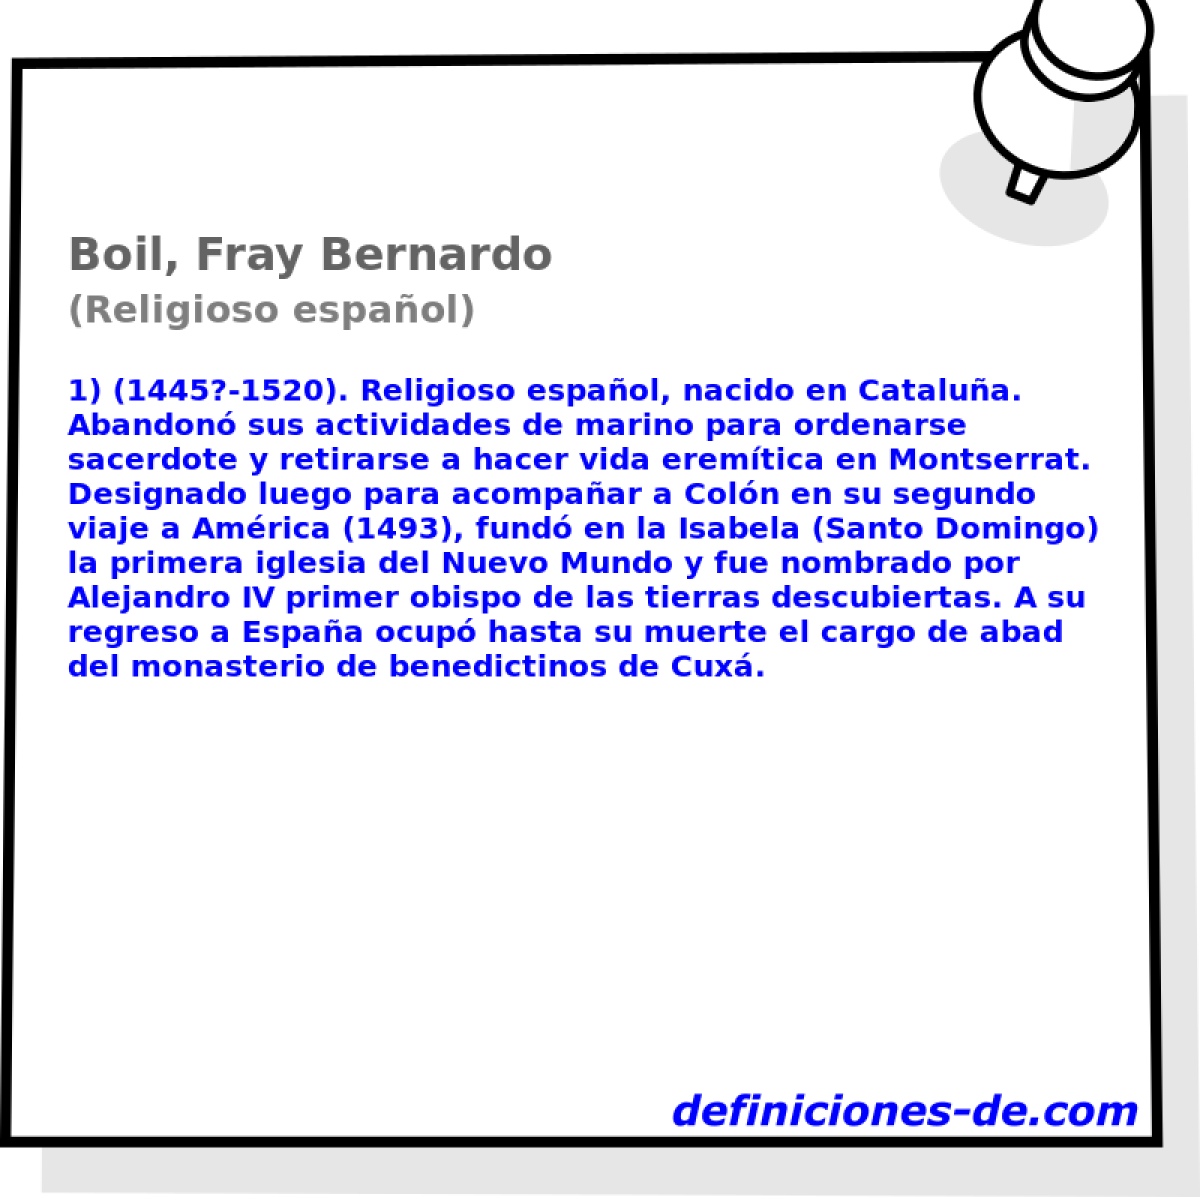 Boil, Fray Bernardo (Religioso espaol)